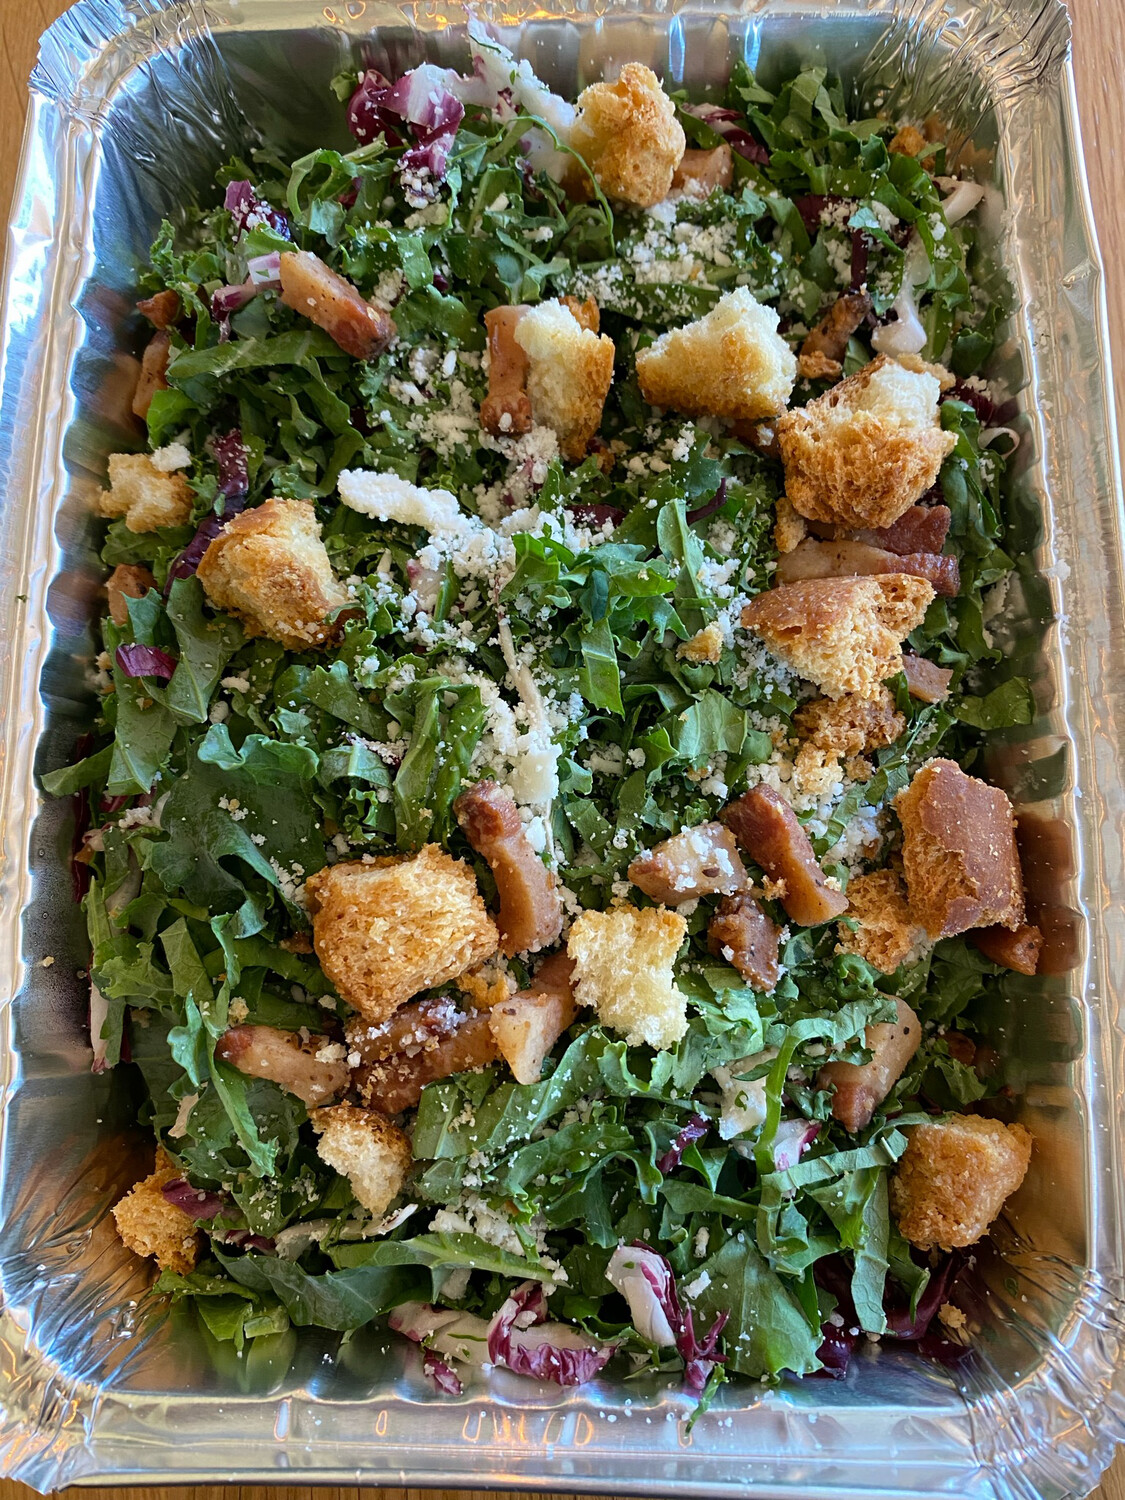 Kale Caesar Salad (Serves 6)